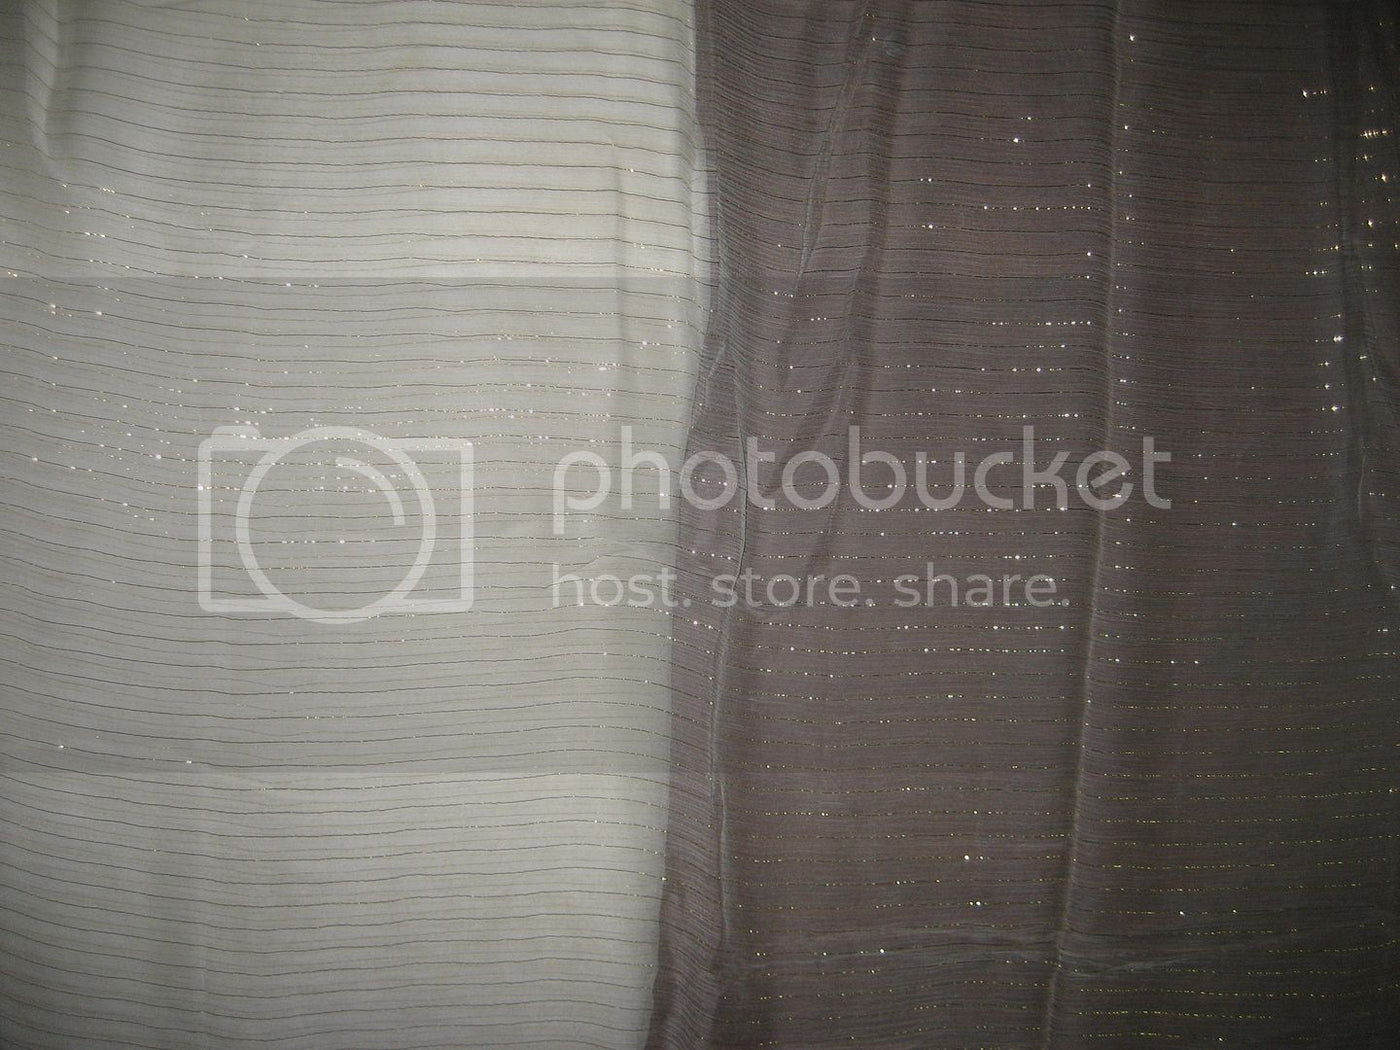 Ivory Chiffon with Metallic stripes Fabric